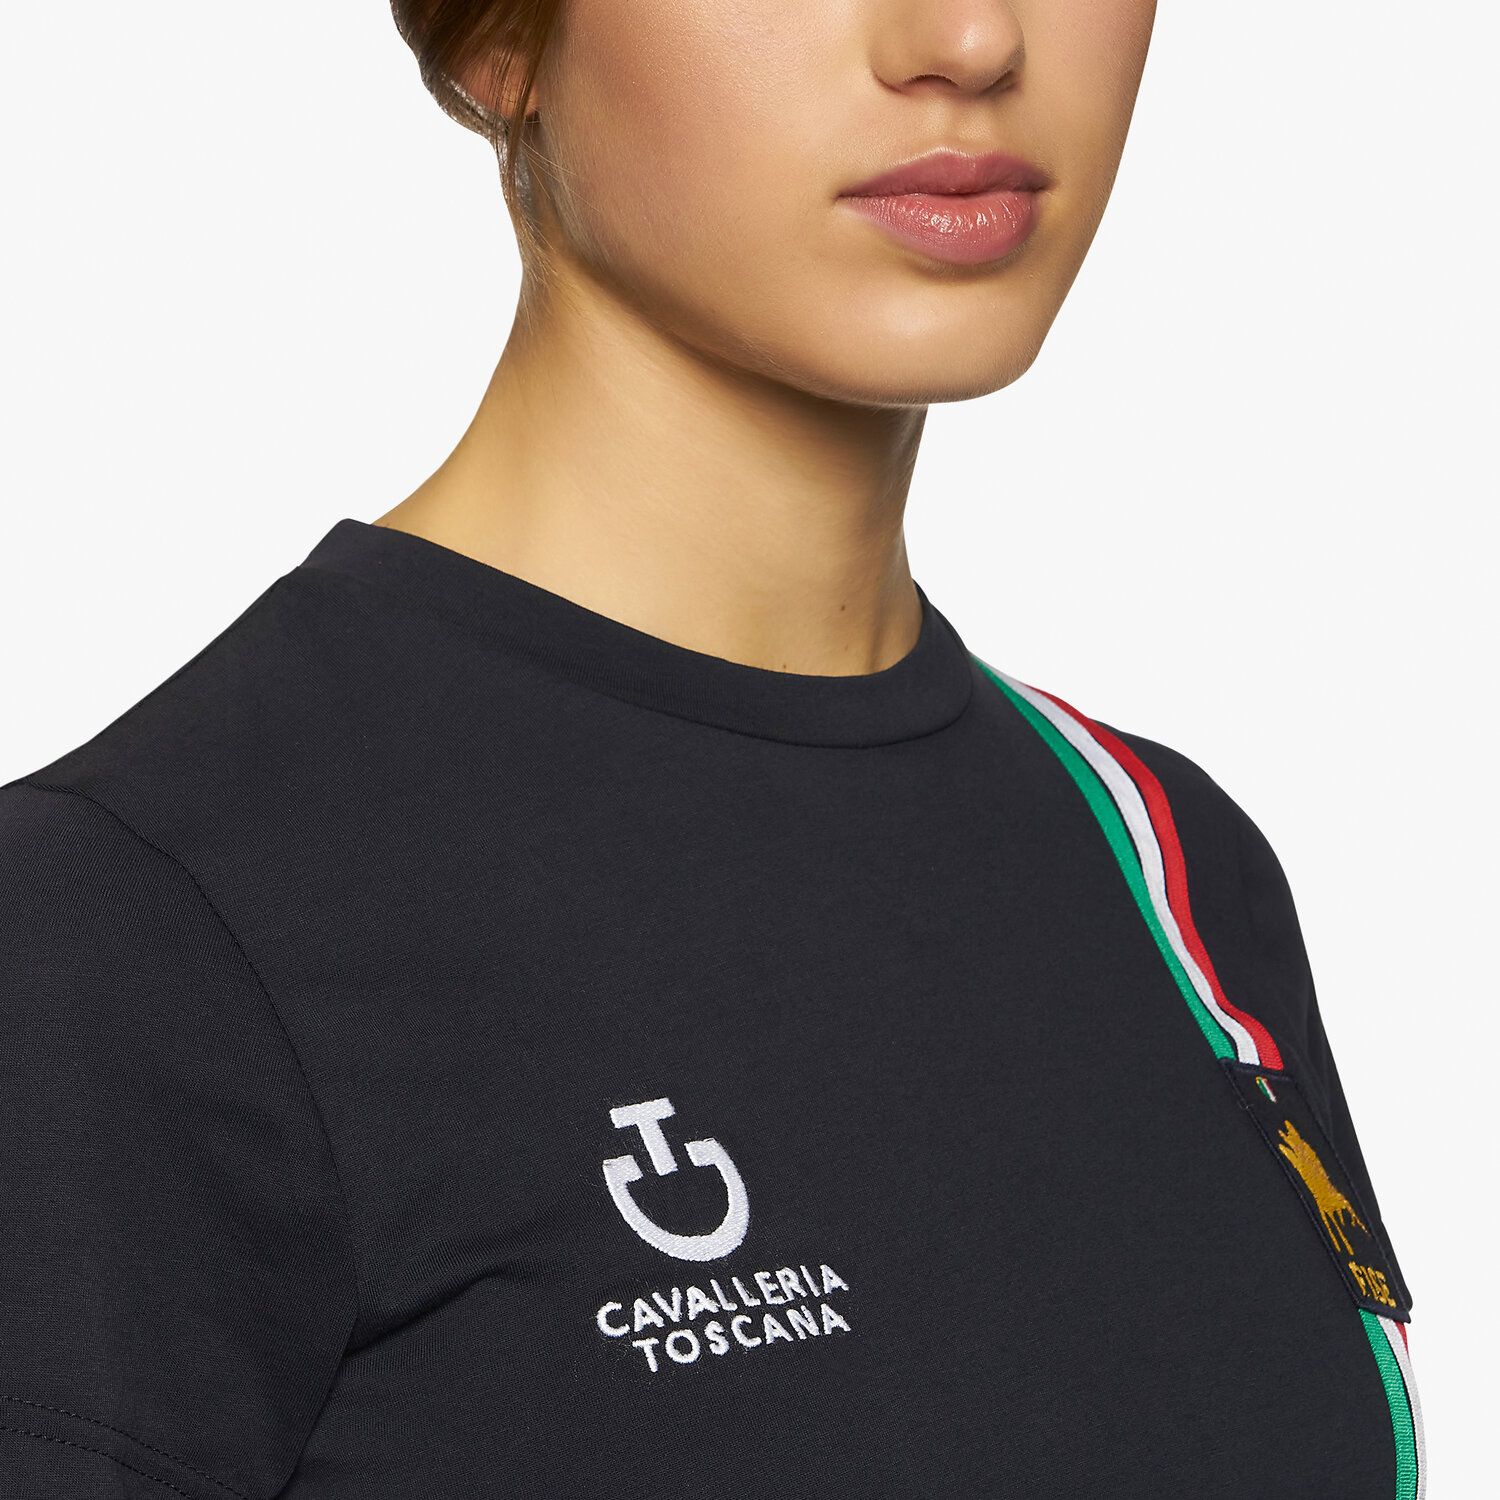 Cavalleria Toscana Women's FISE short sleeved t-shirt NAVY-6